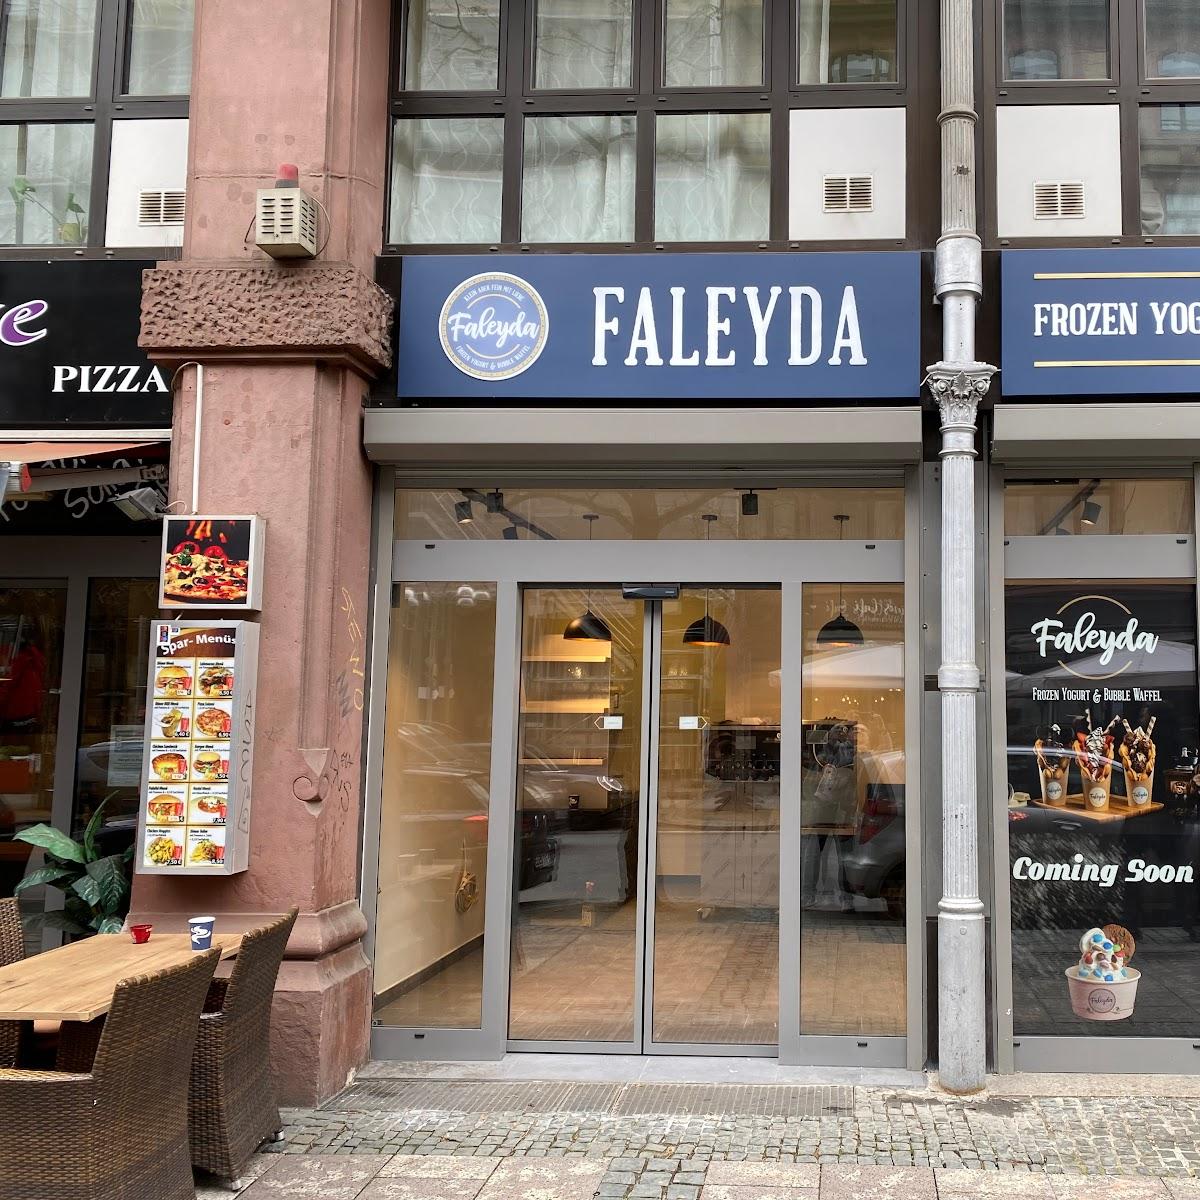 Restaurant "Faleyda Zeil Frozen Yogurt, Waffel & Bio Eis" in Frankfurt am Main